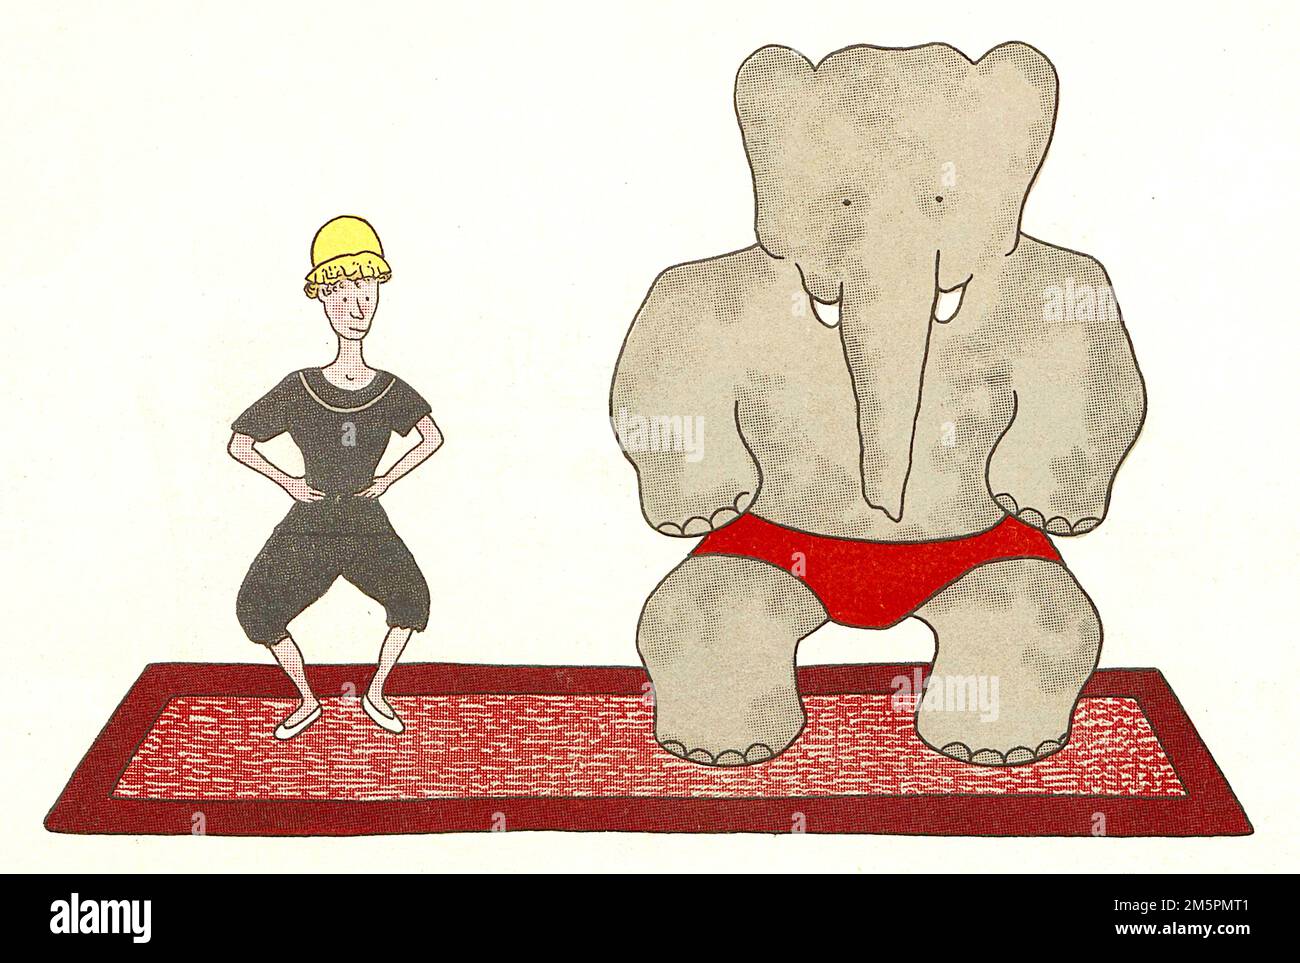 Jean de Brunhoff - Babar the Elephant Stock Photo